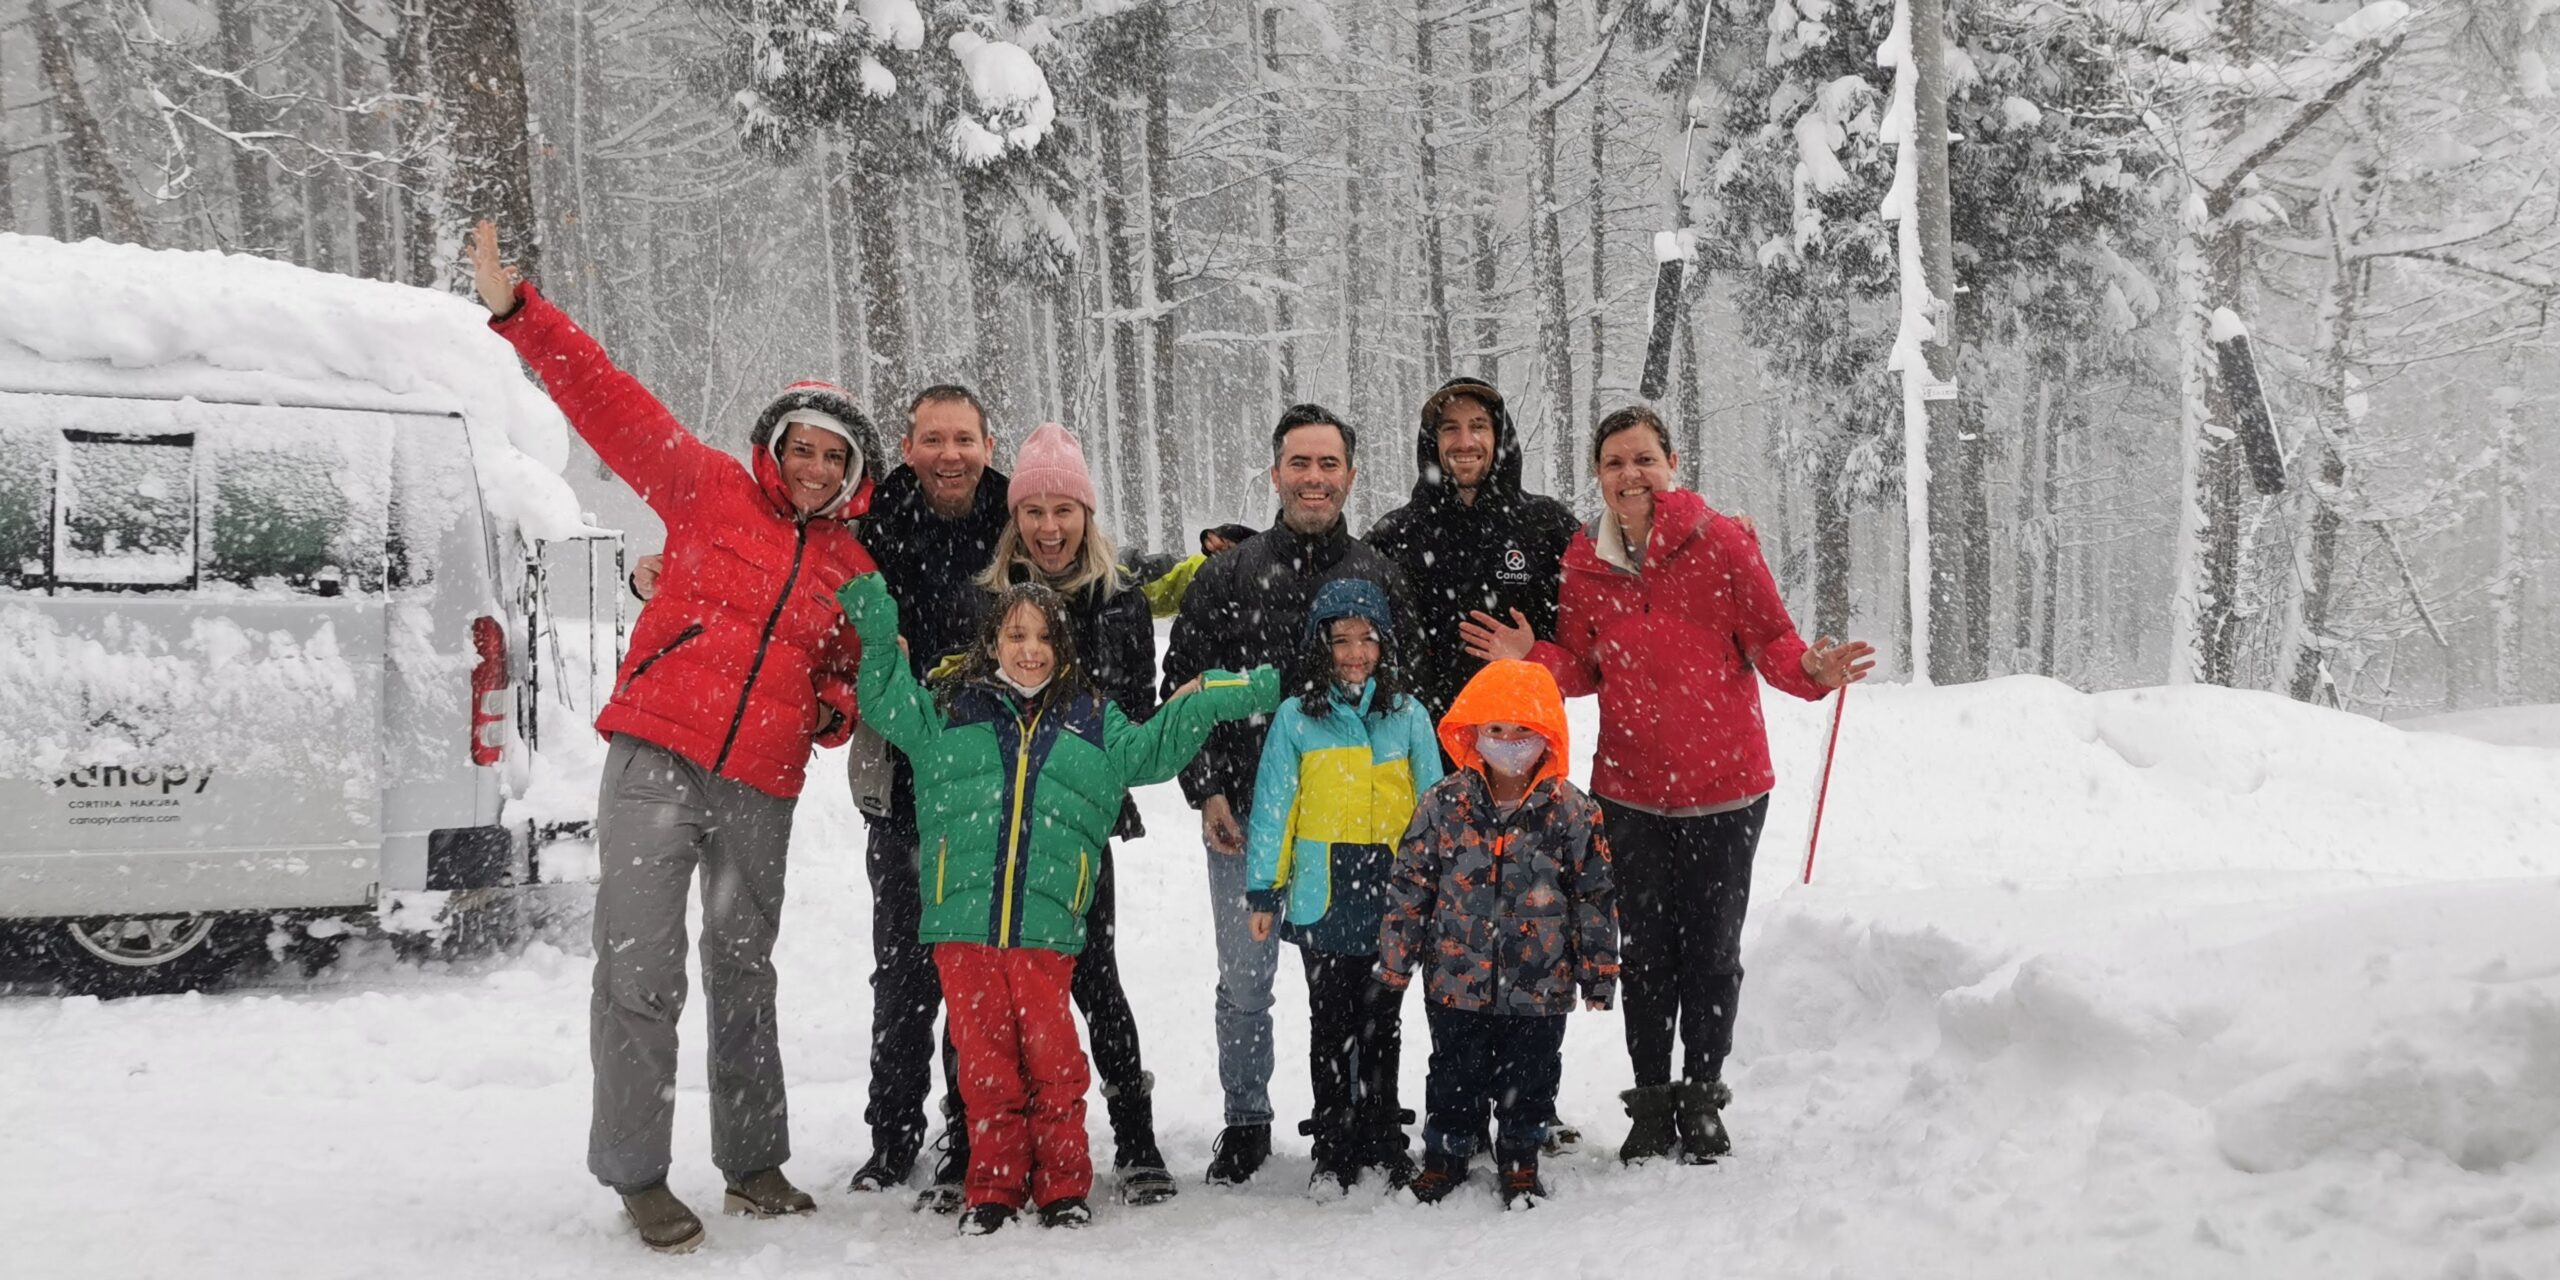 ski holiday - family